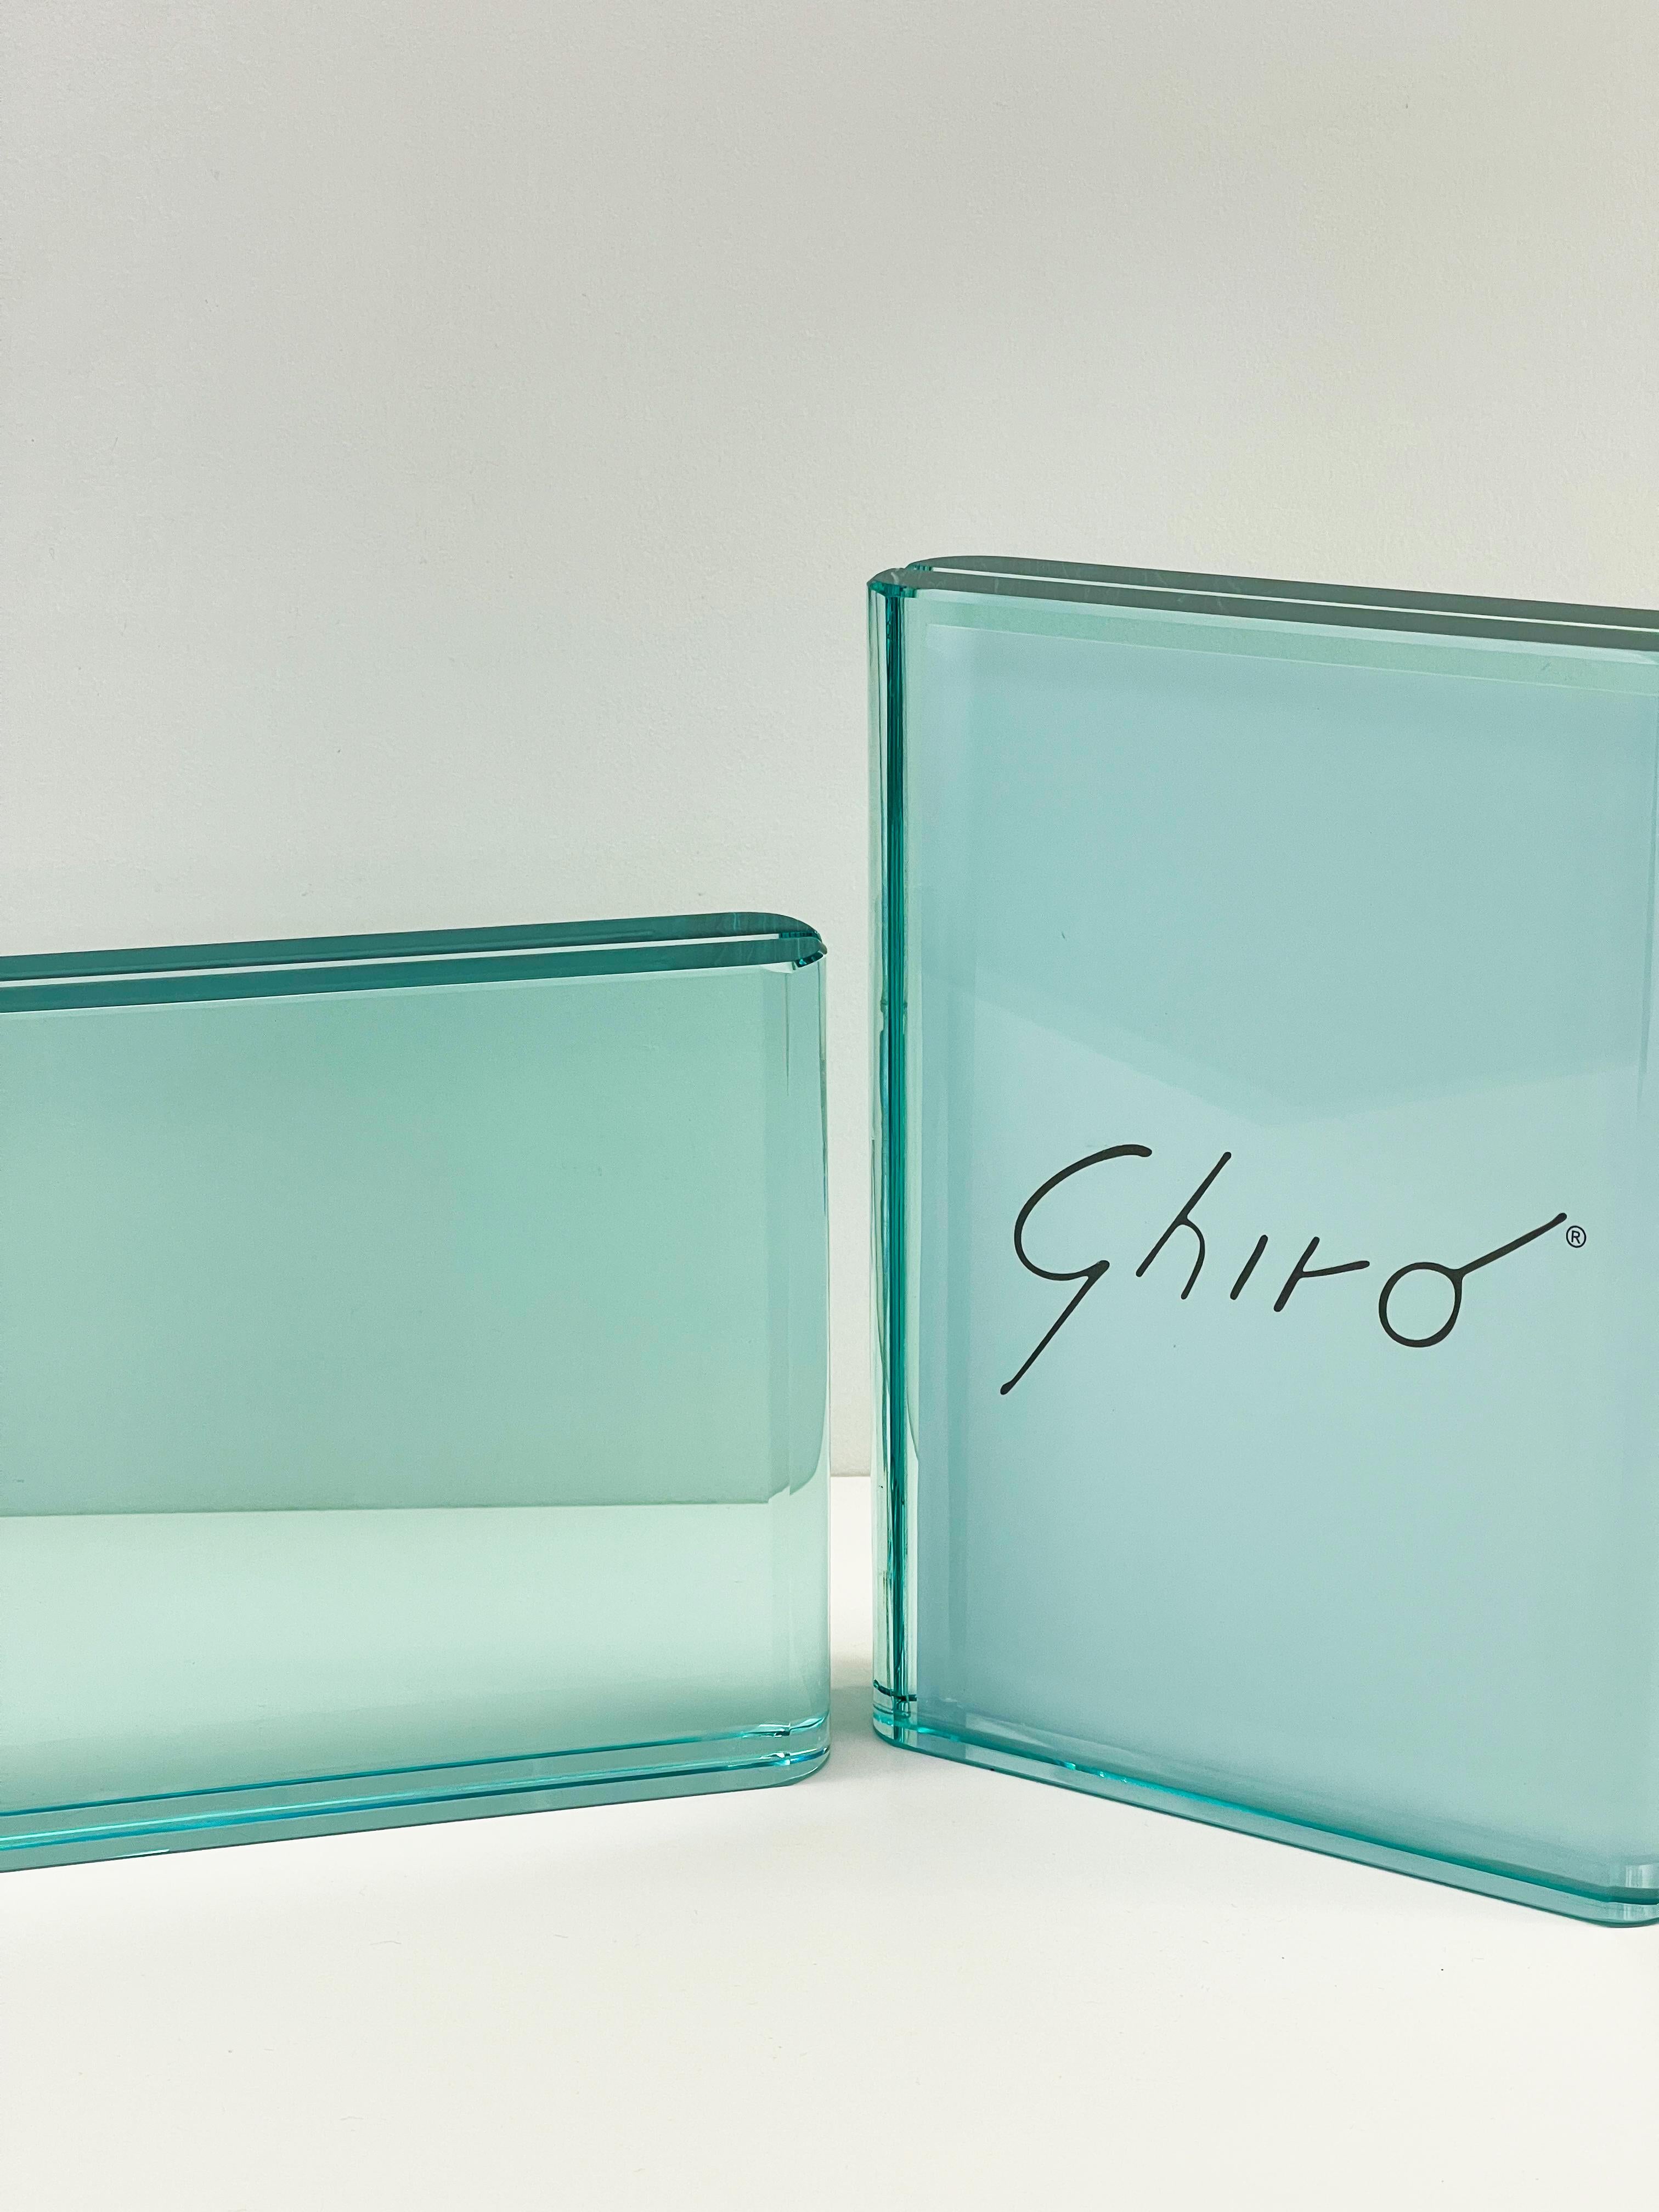 Contemporary Handmade Aquamarine Crystal Horizontal Photo Frame by Ghirò Studio For Sale 2